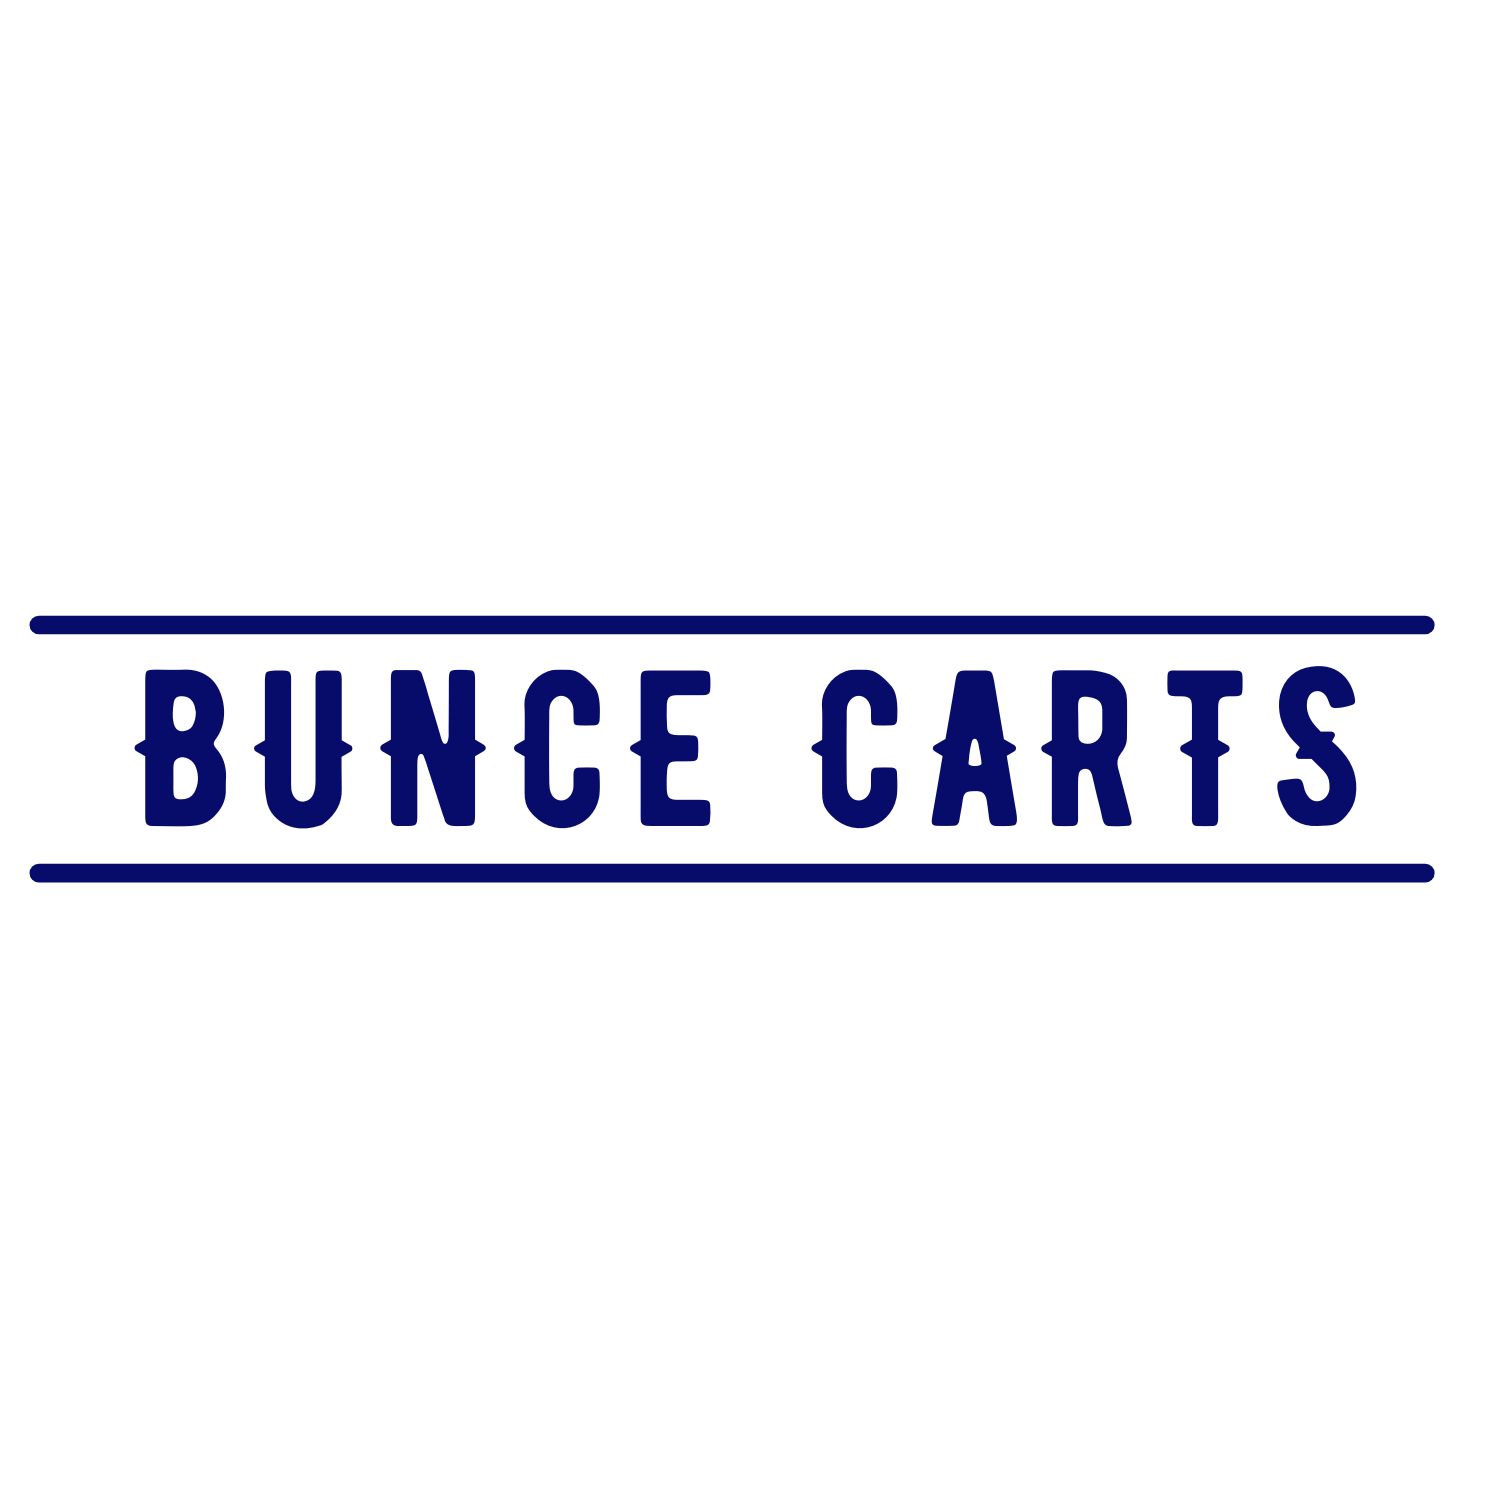 Bunce Carts